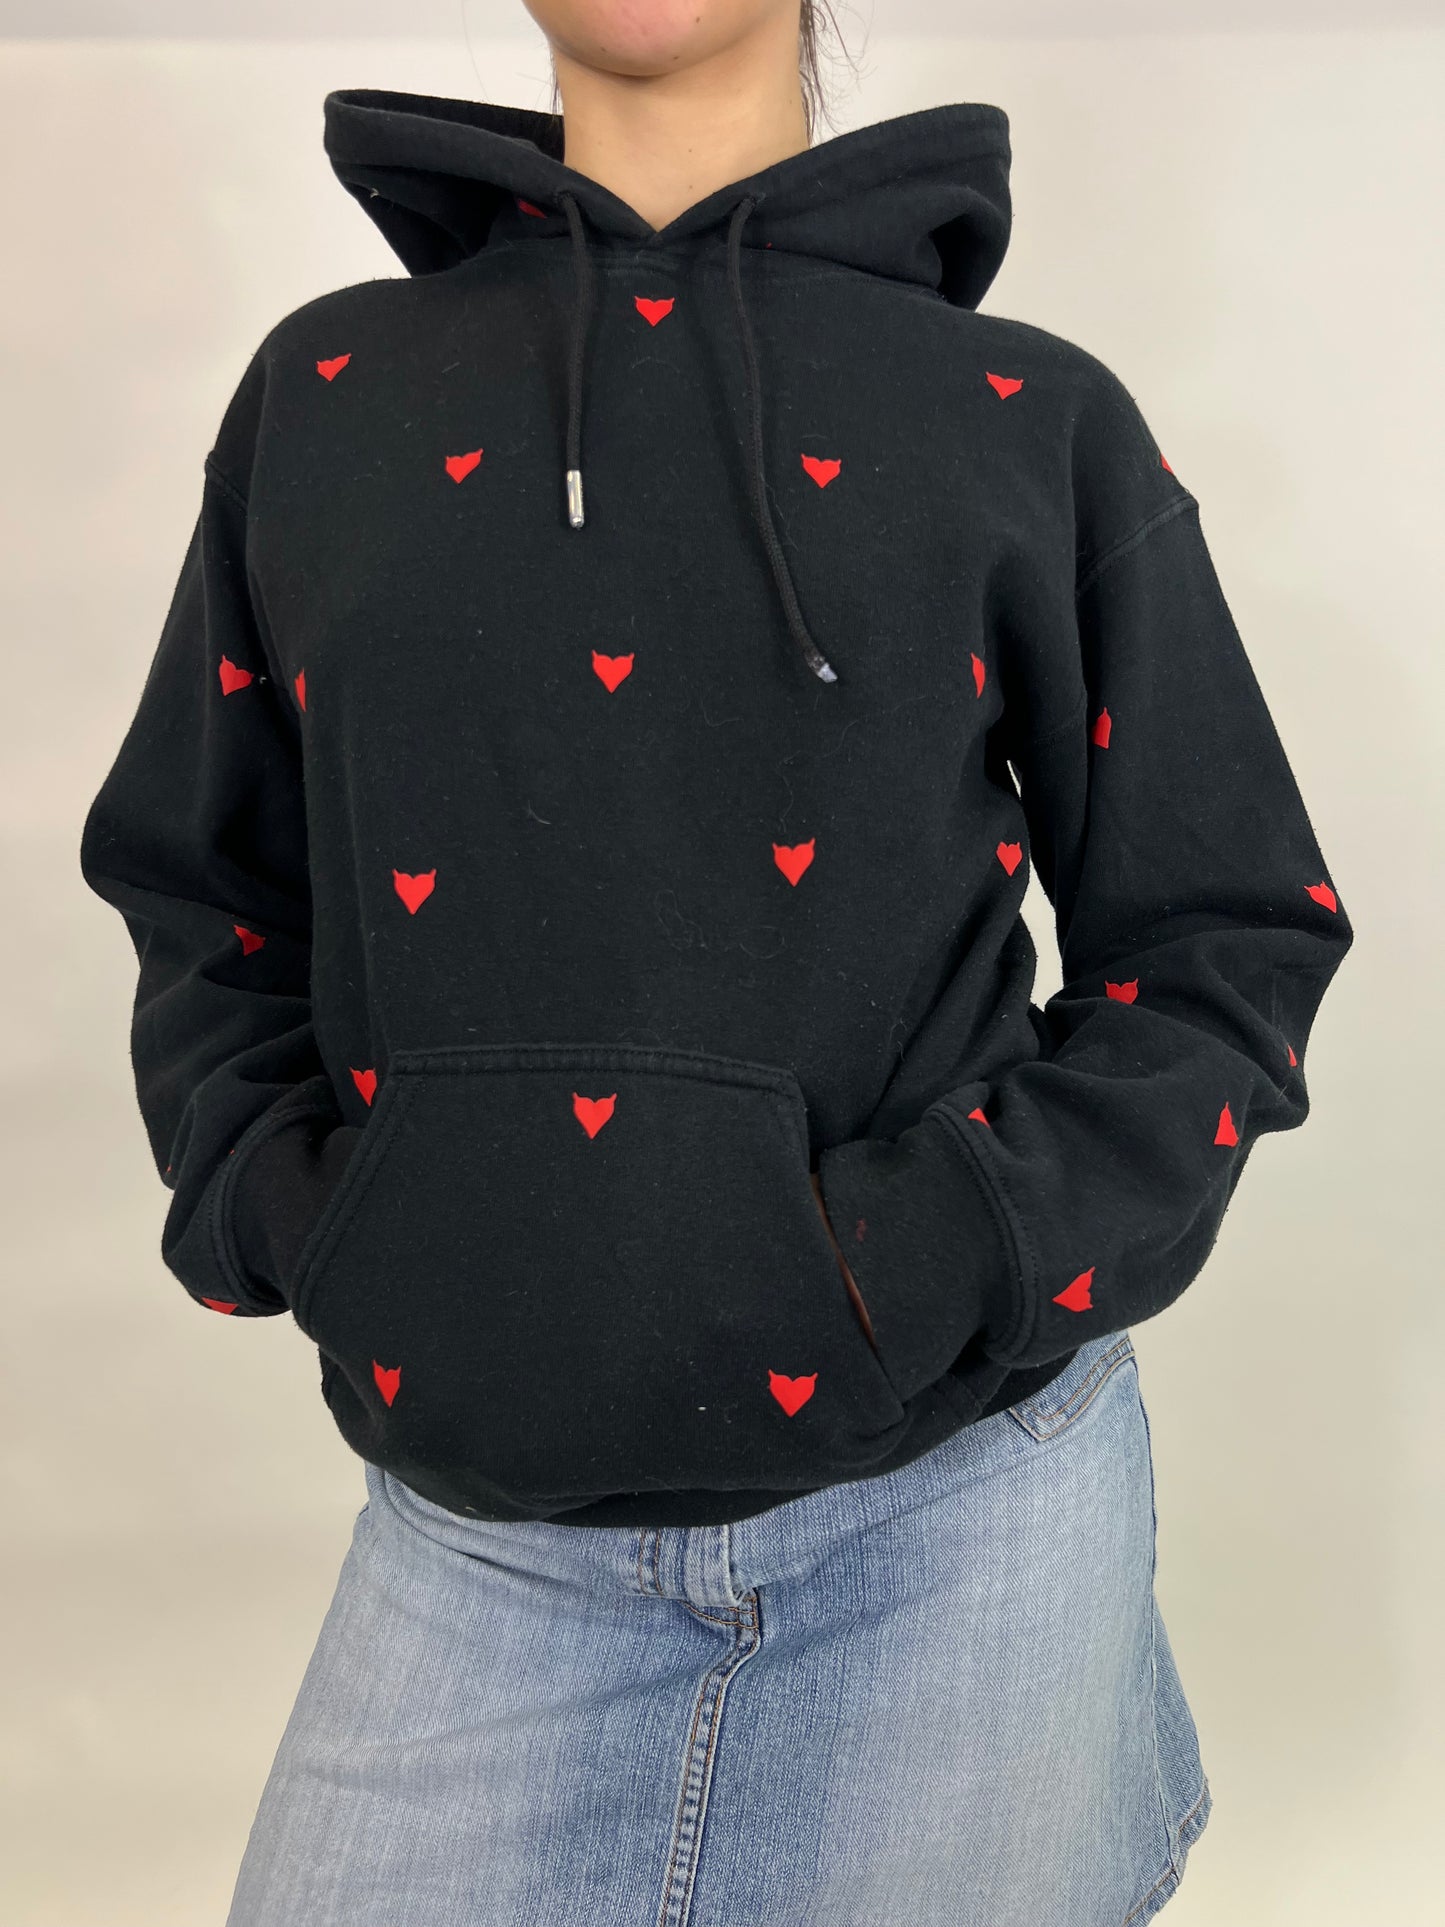 Black Hoodie with Red Heart Print